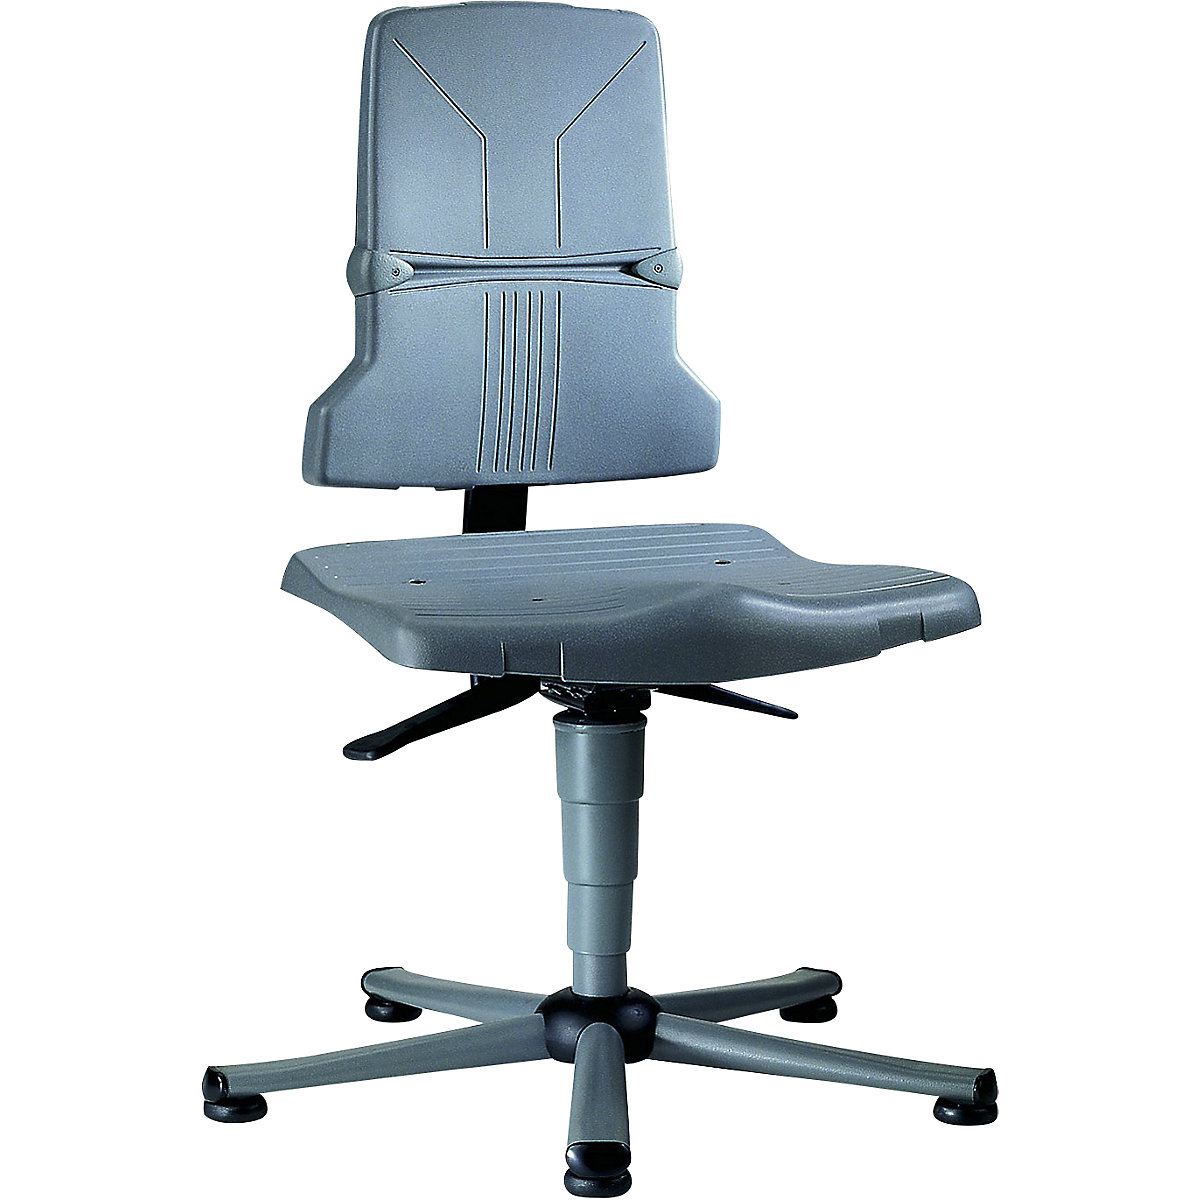 SINTEC industrial swivel chair - bimos